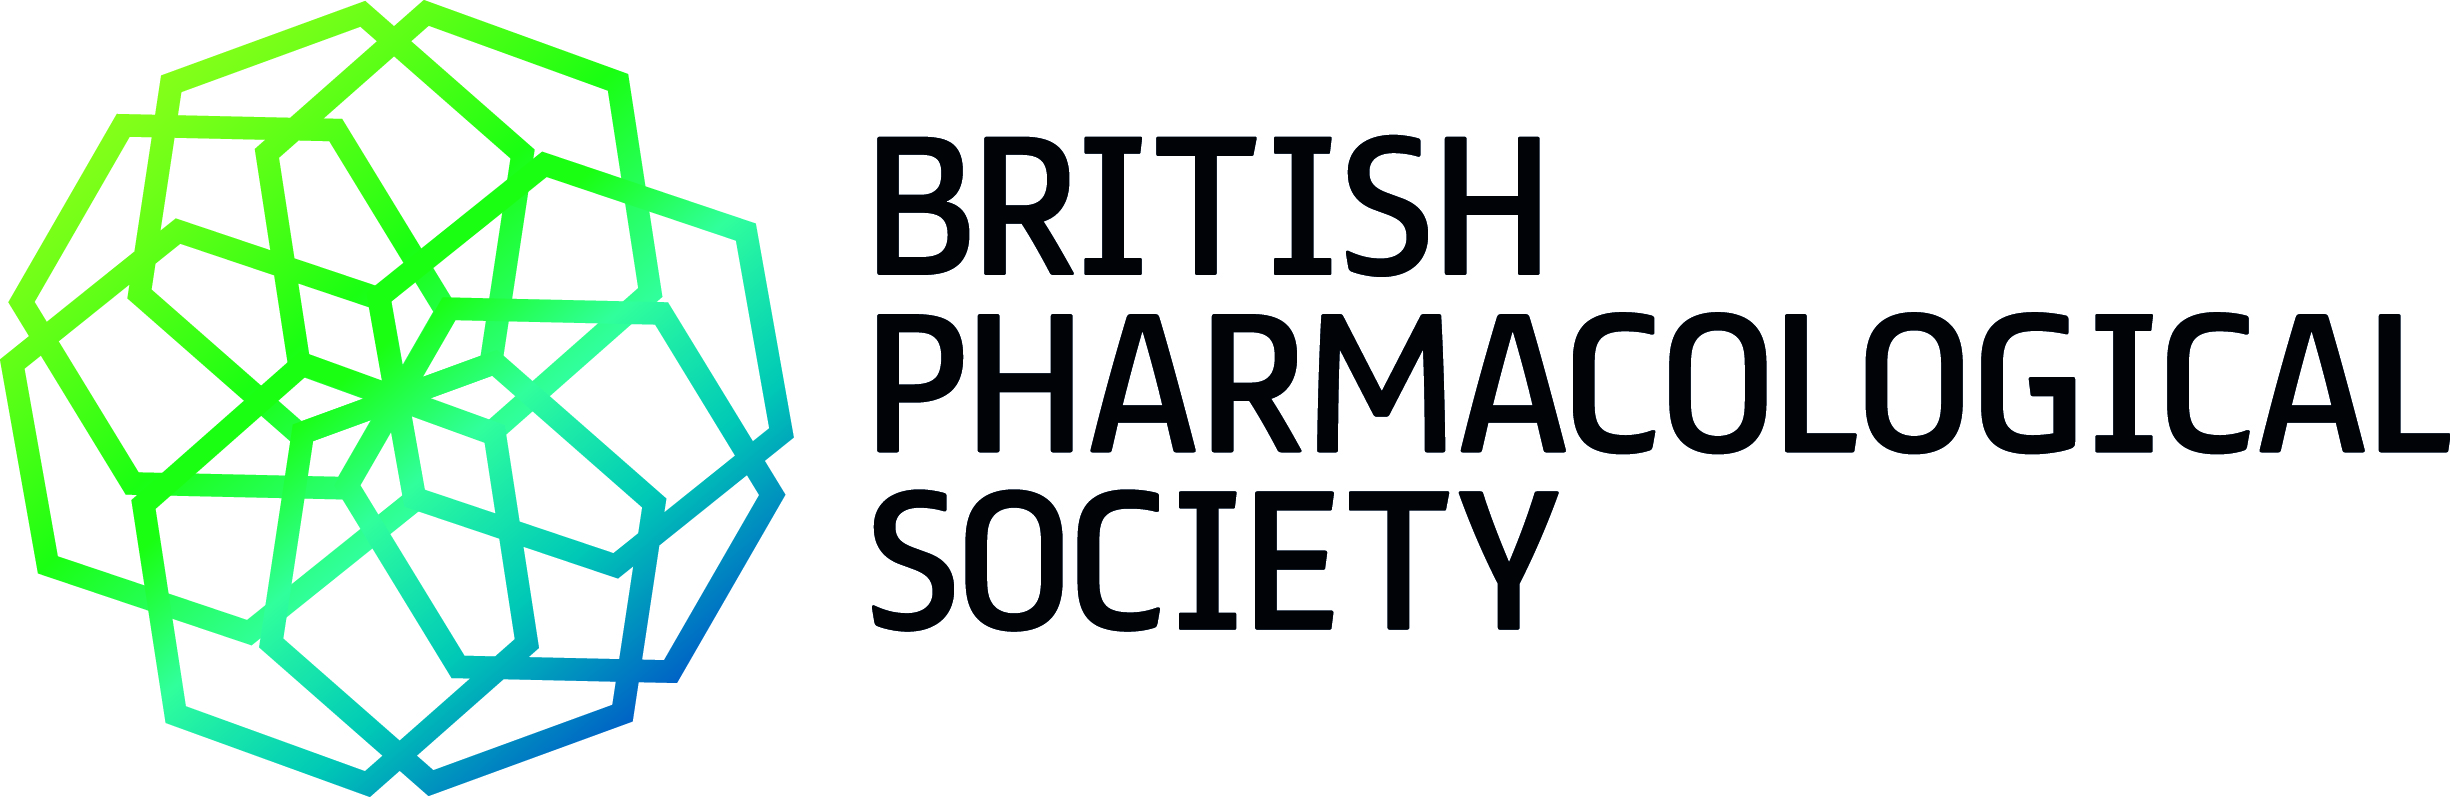 British Pharmacological Society logo